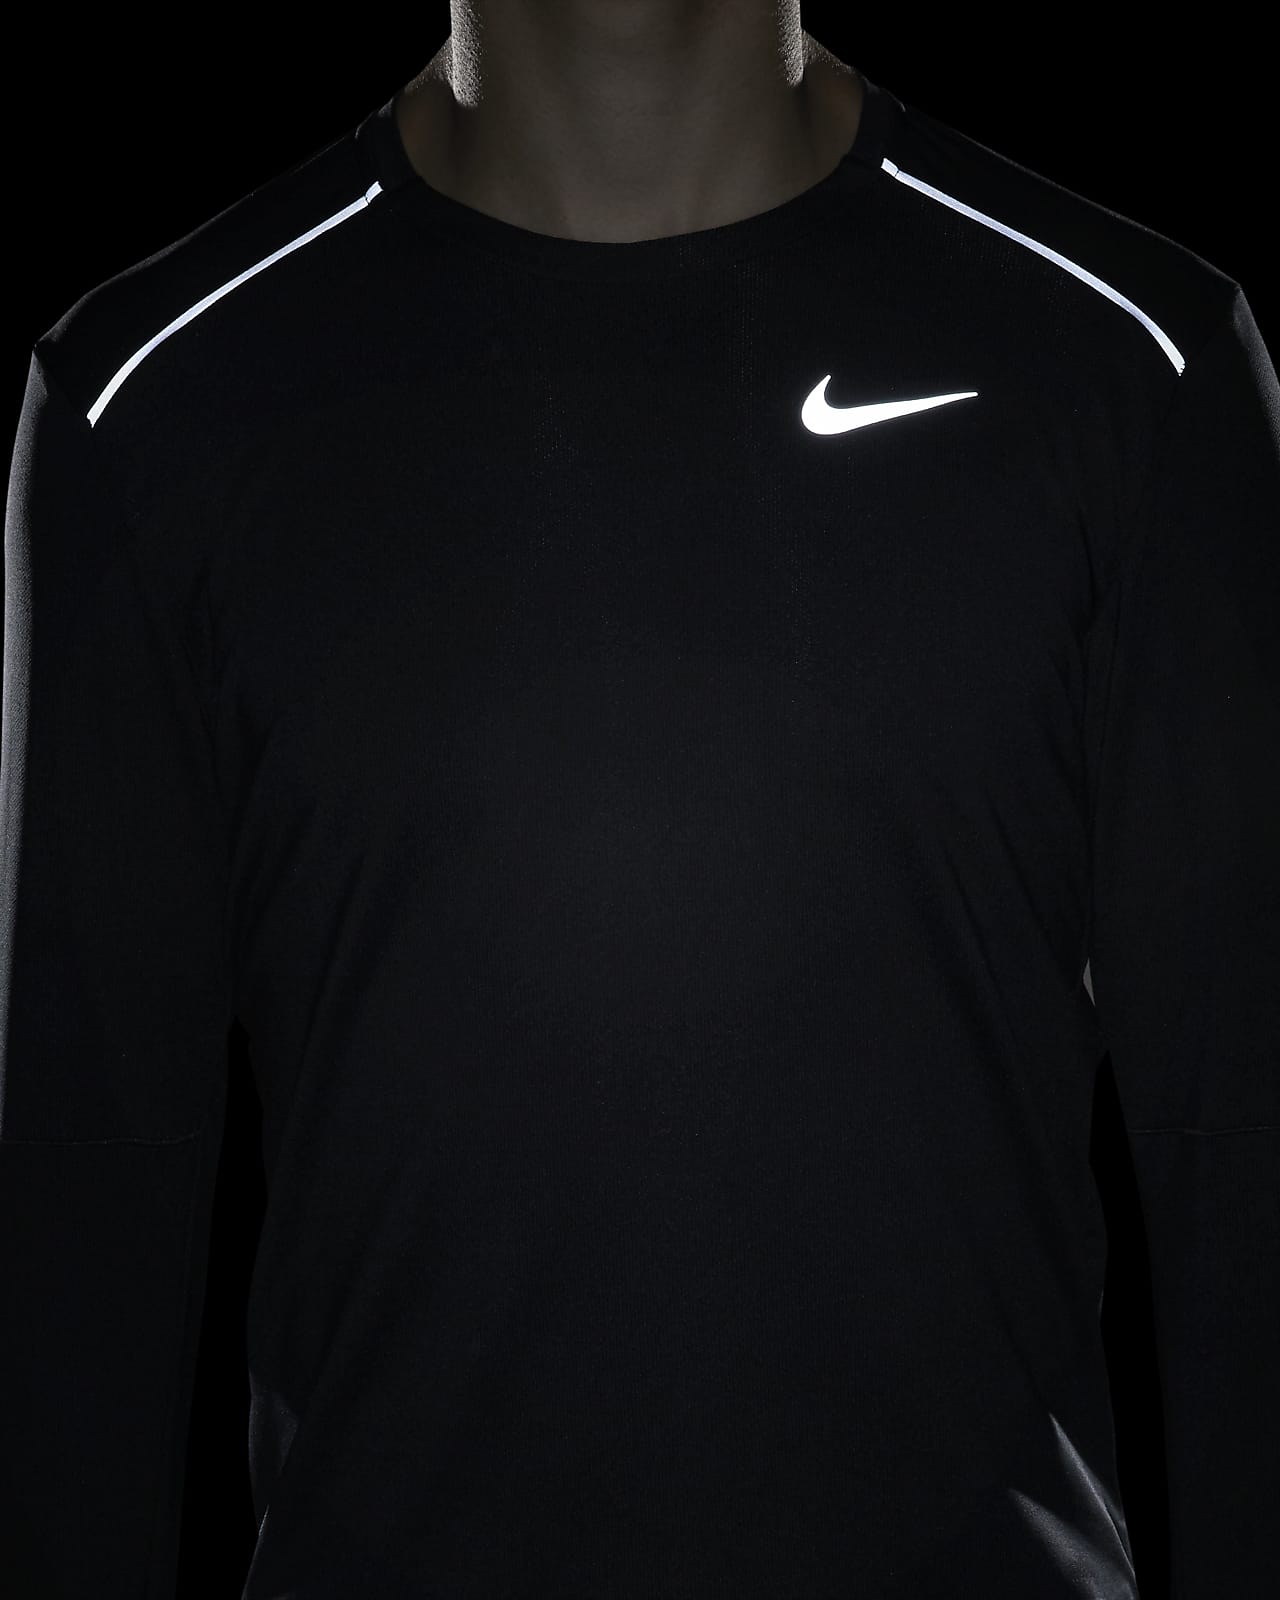 nike men's element 3.0 long sleeve running shirt